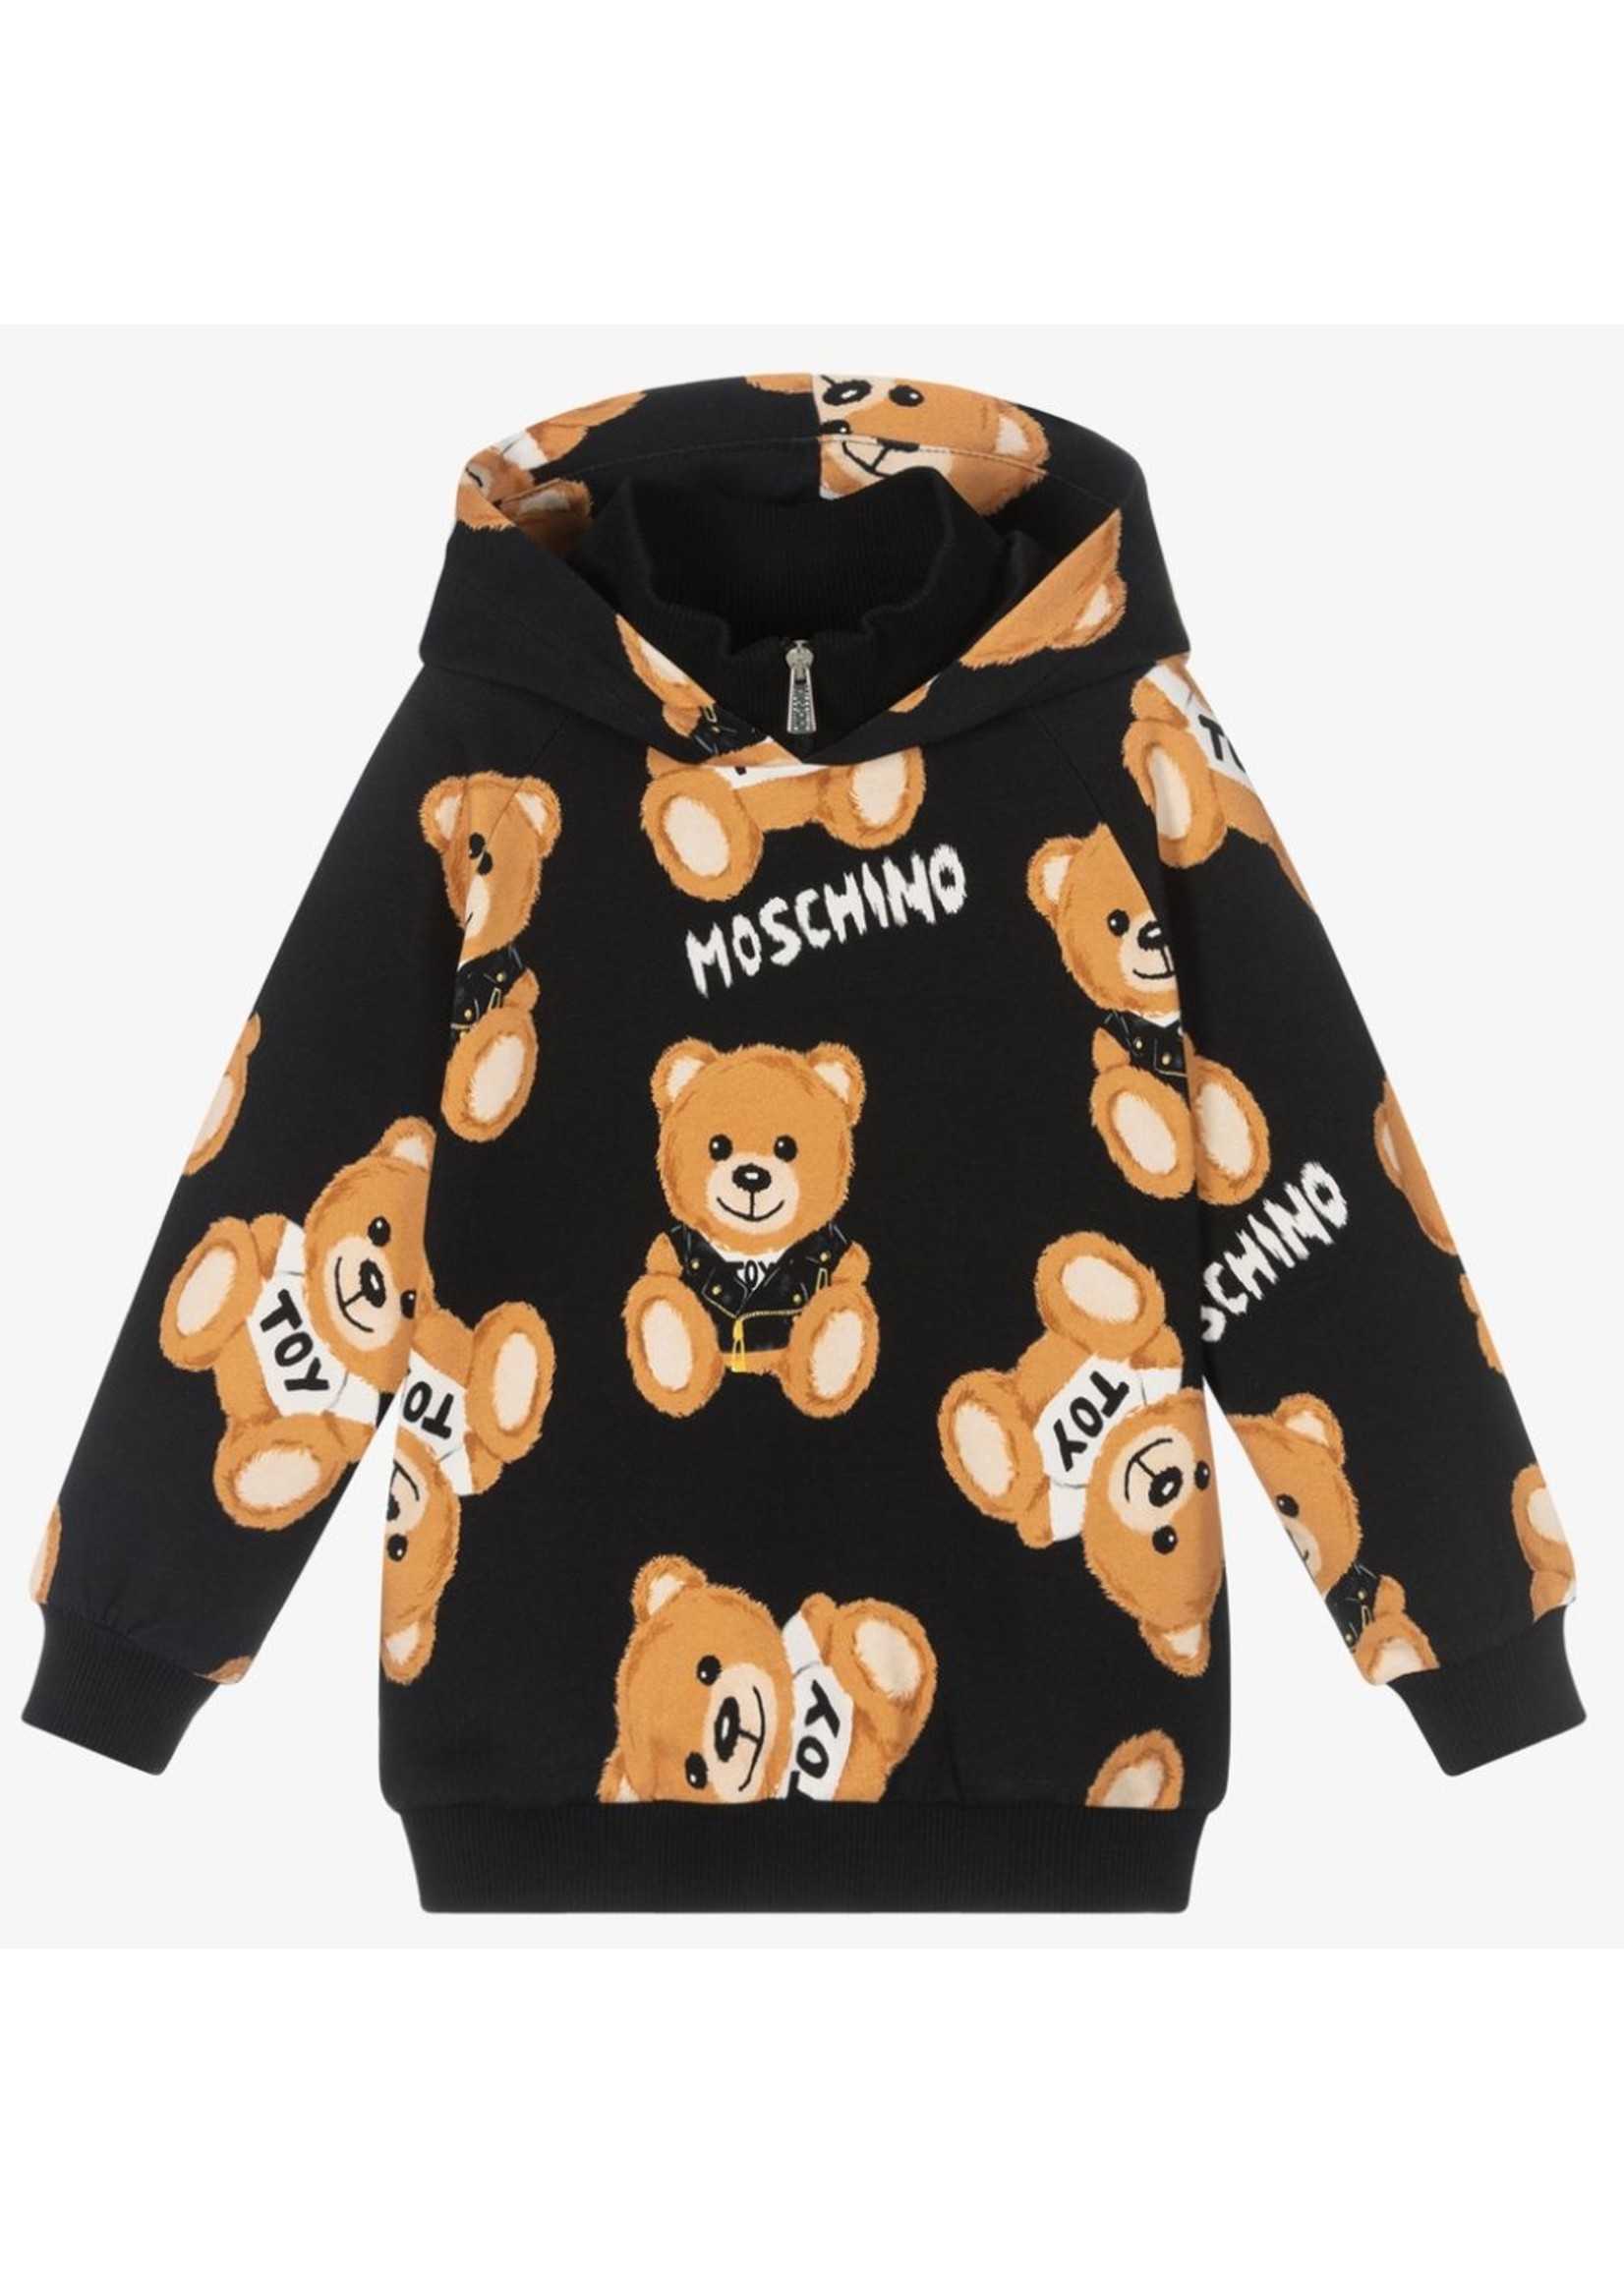 Moschino Moschino jurk zwart met beer